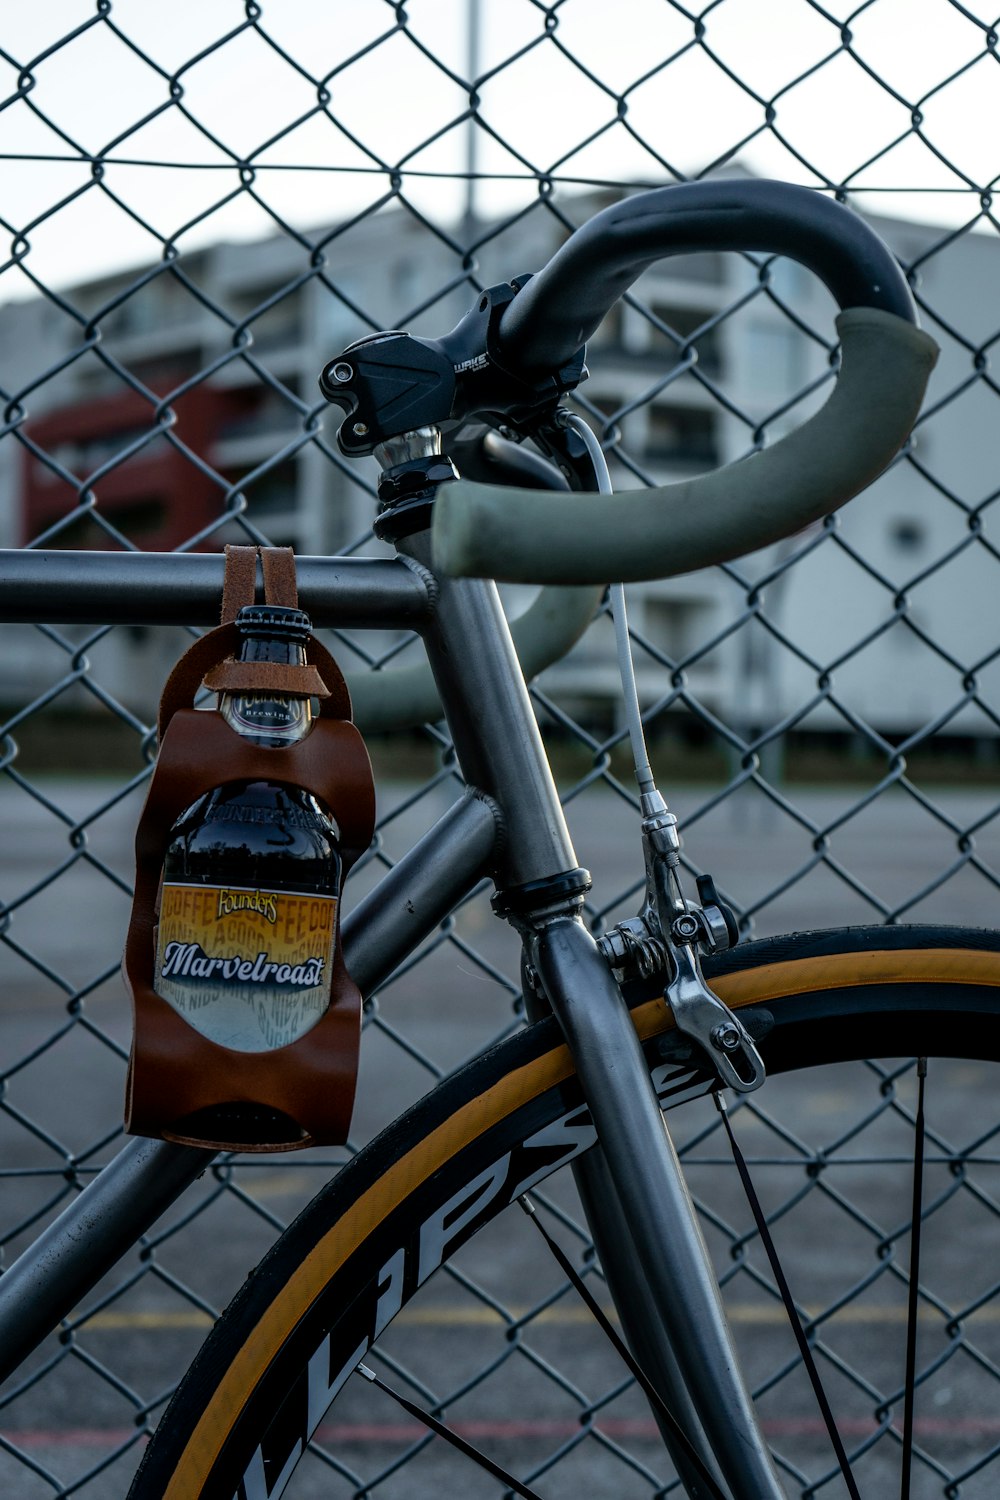 garrafa marrom e preta na bicicleta